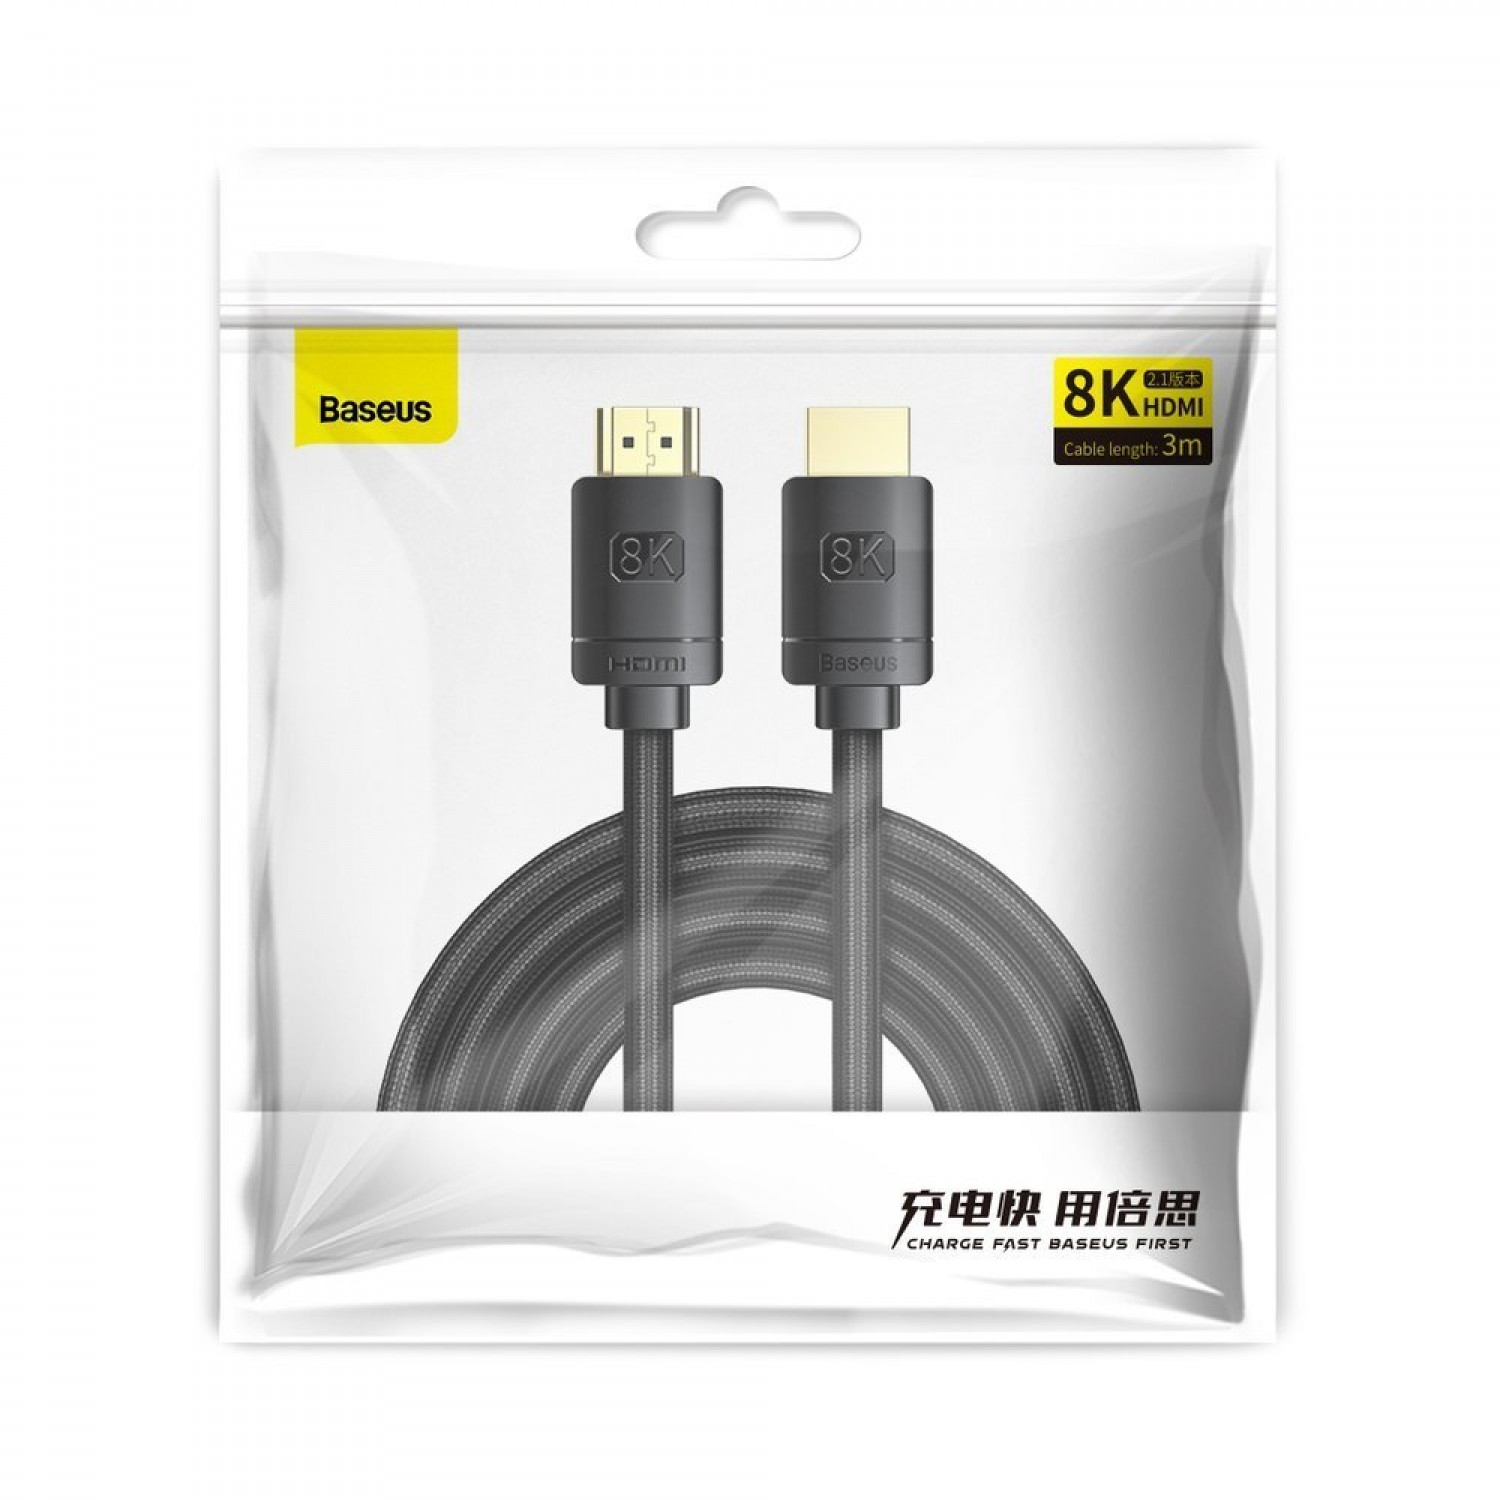 کابل HDMI (اچ دی ام آی) Baseus CAKGQ-A01 - 1M-1